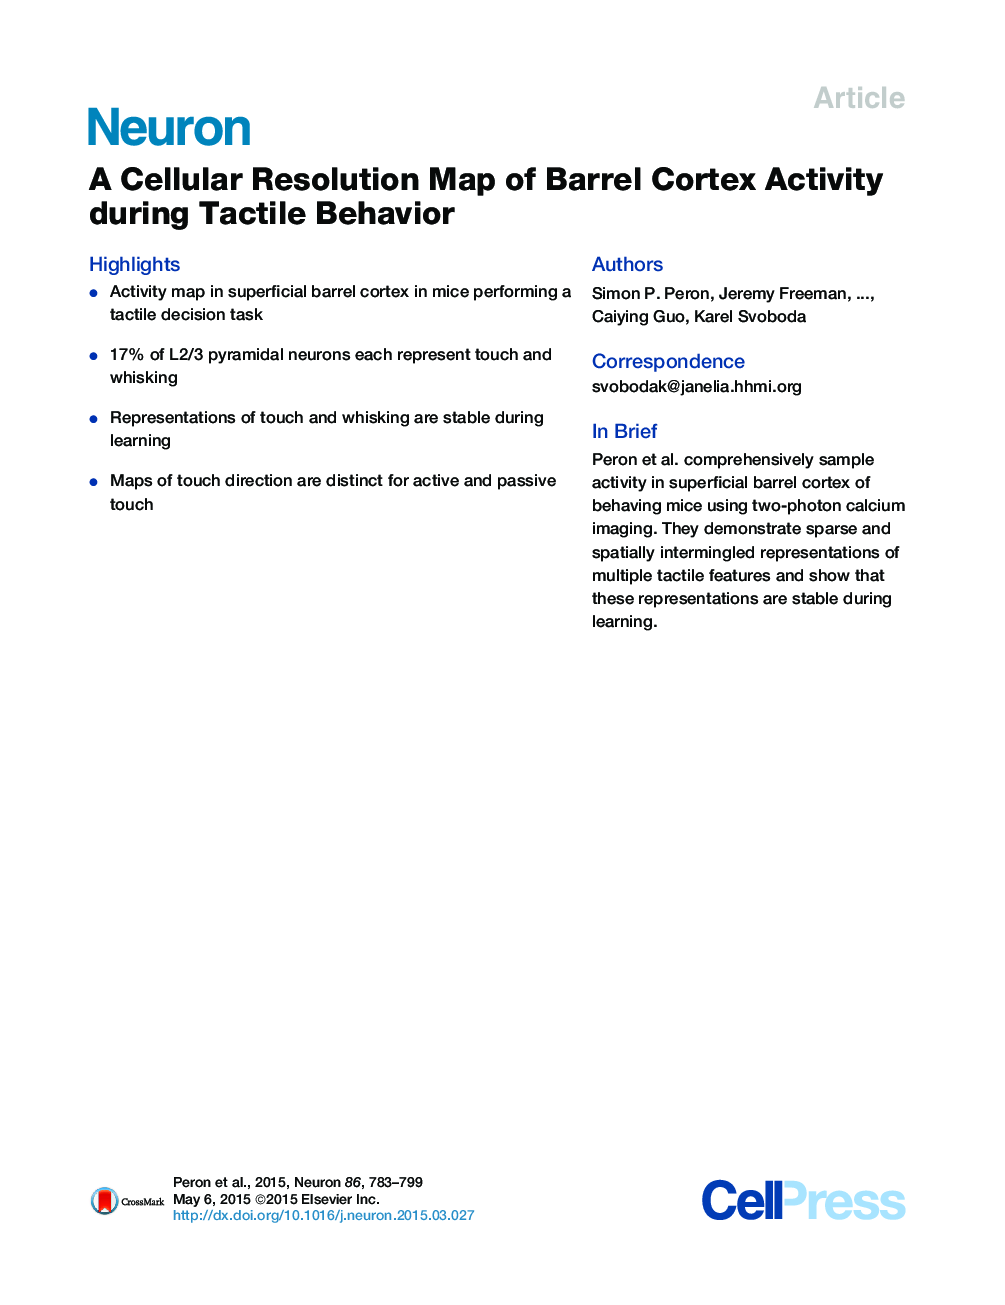 A Cellular Resolution Map of Barrel Cortex Activity during Tactile Behavior